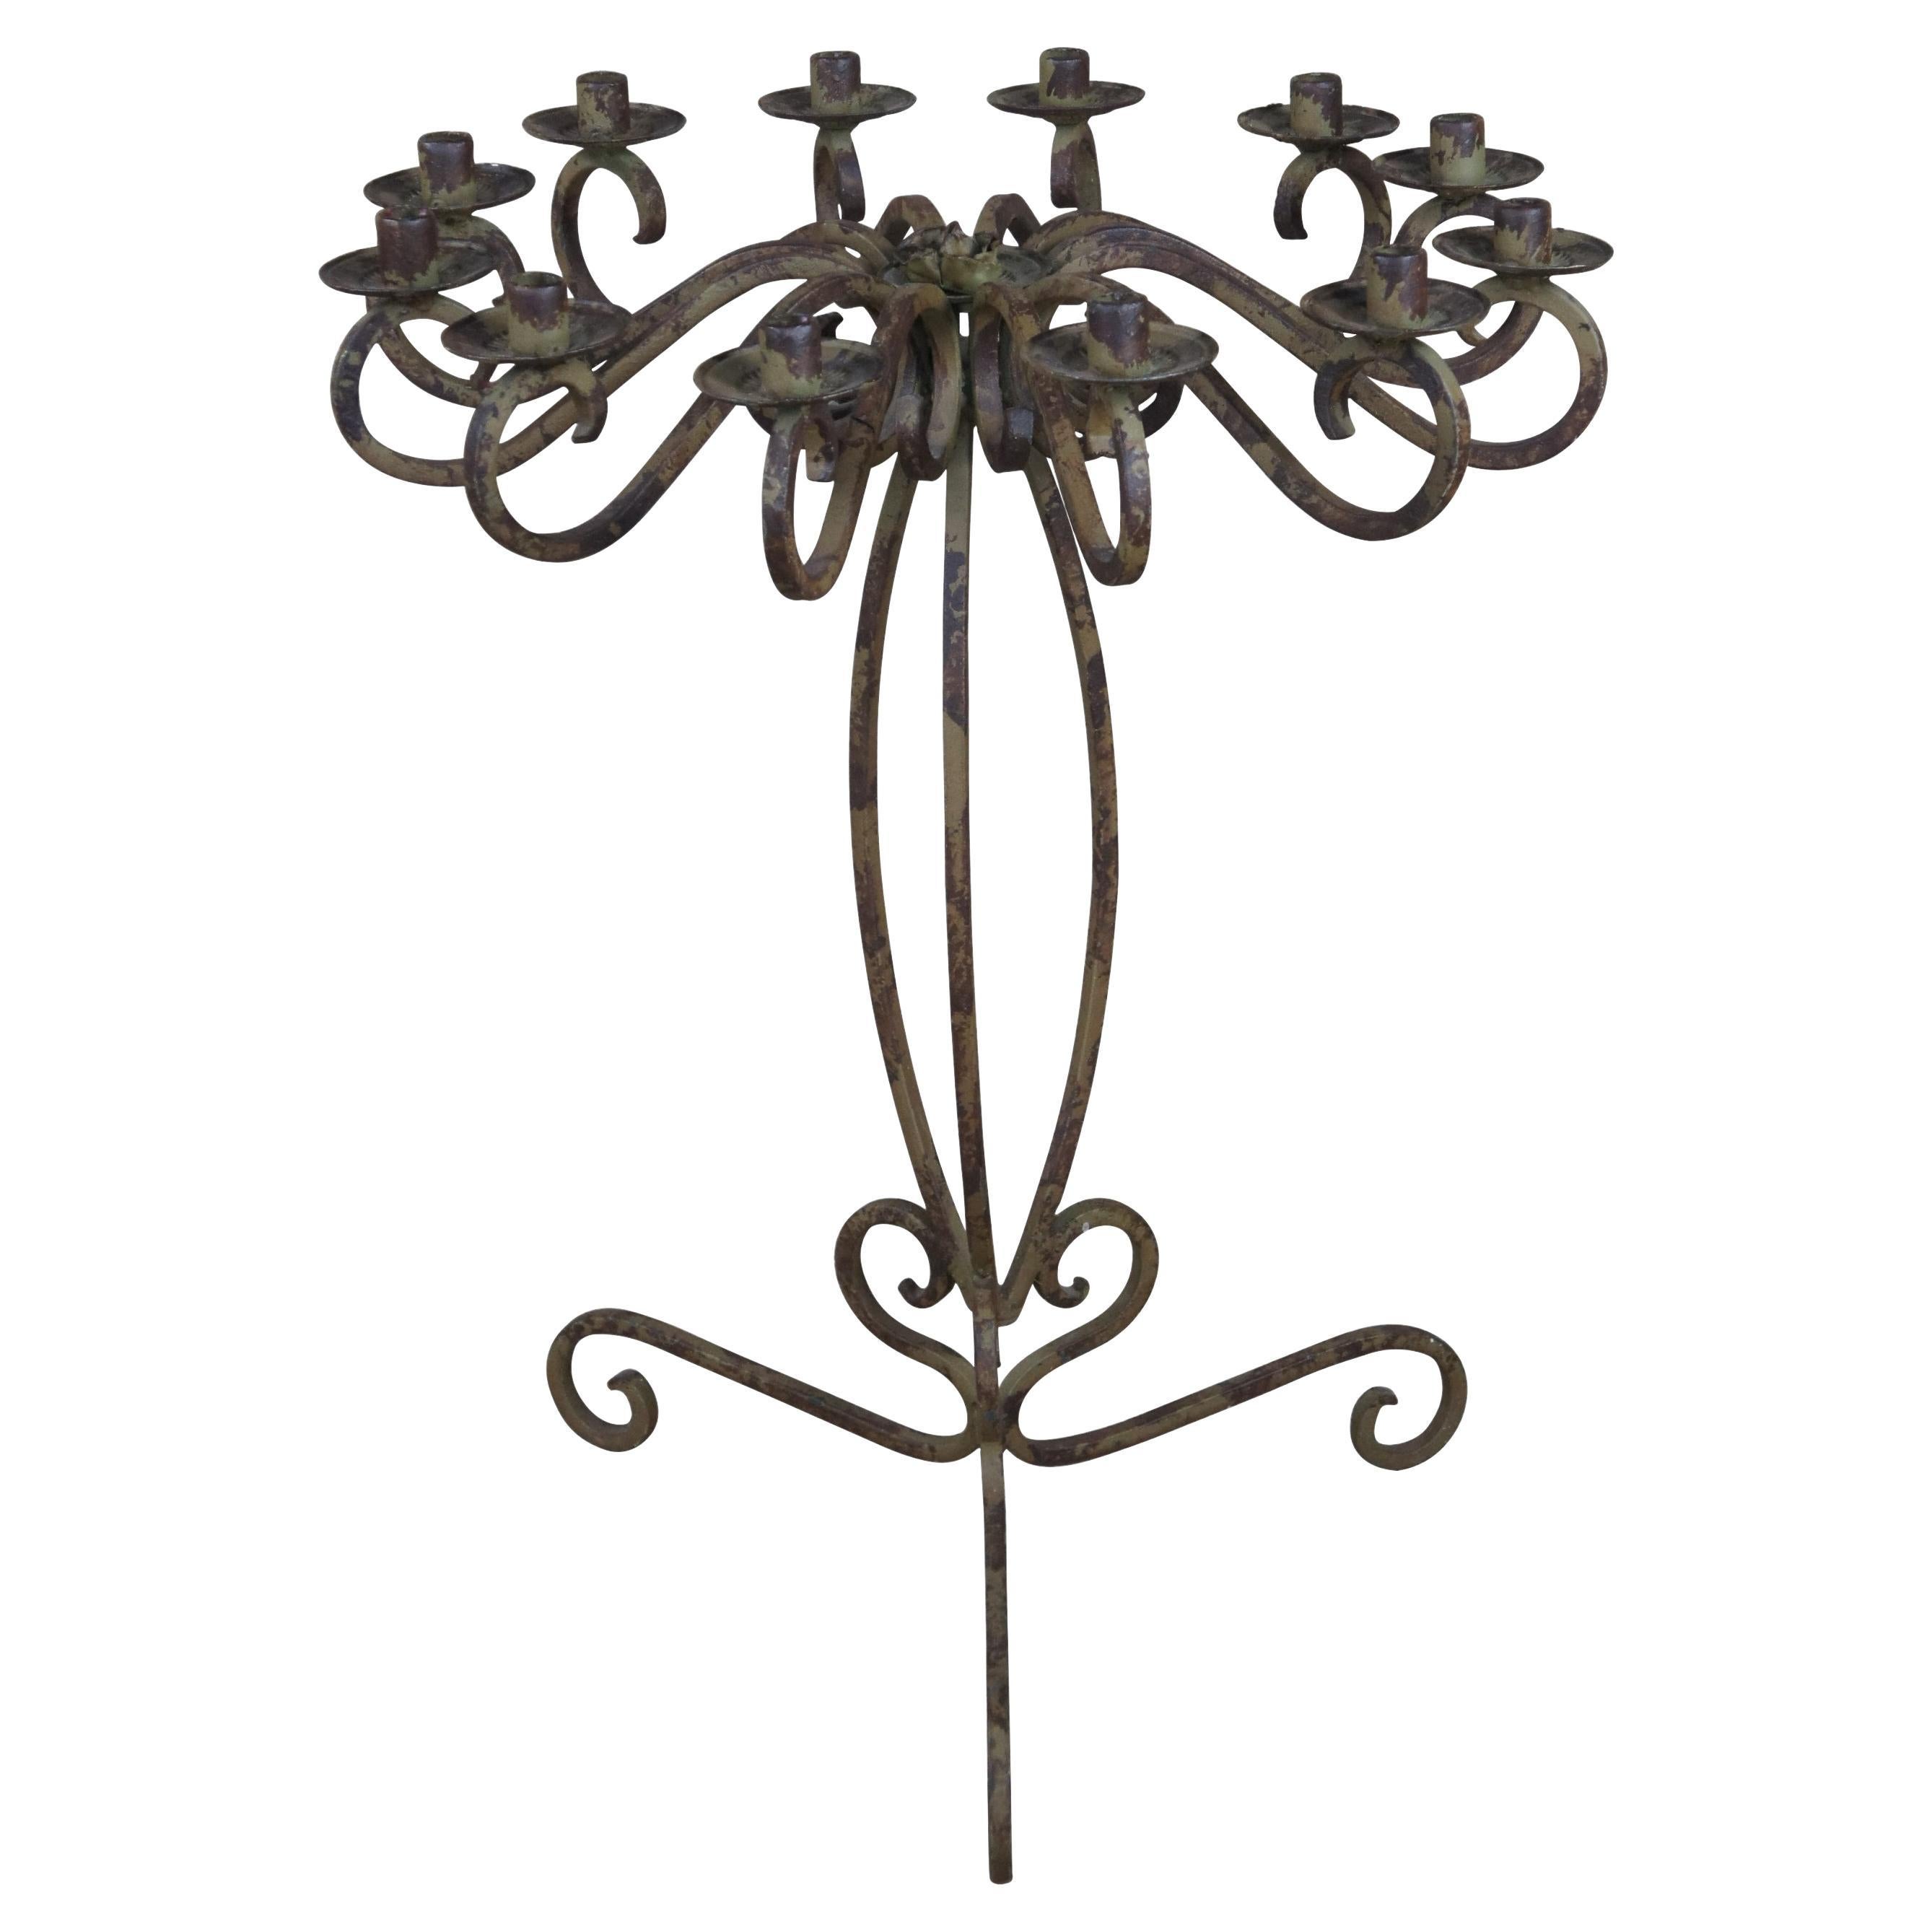 Vintage French Scrolled Iron 12 Light Altar Floor Pedestal Candelabra Gothic